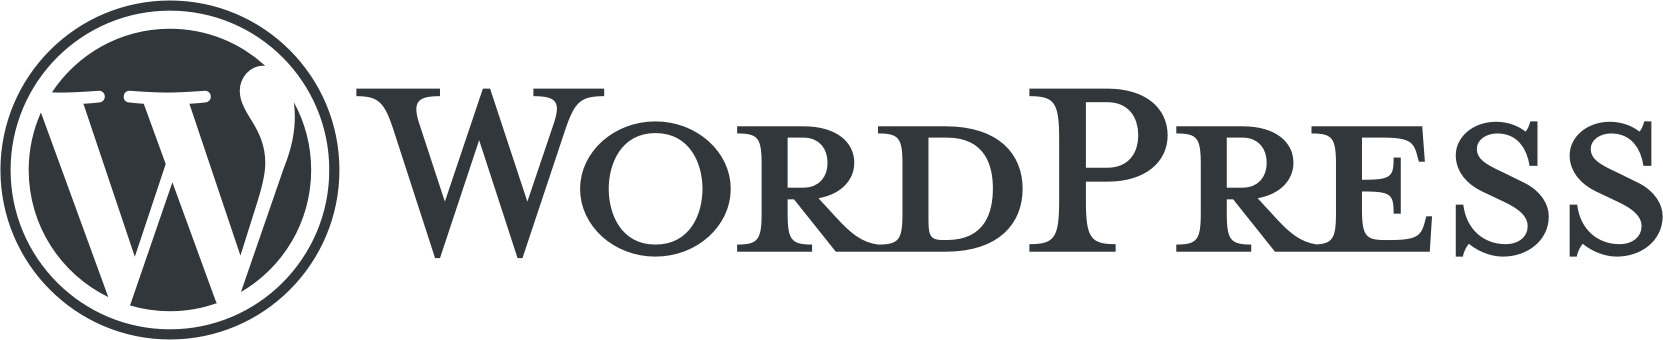 WordPress logotype standard 1